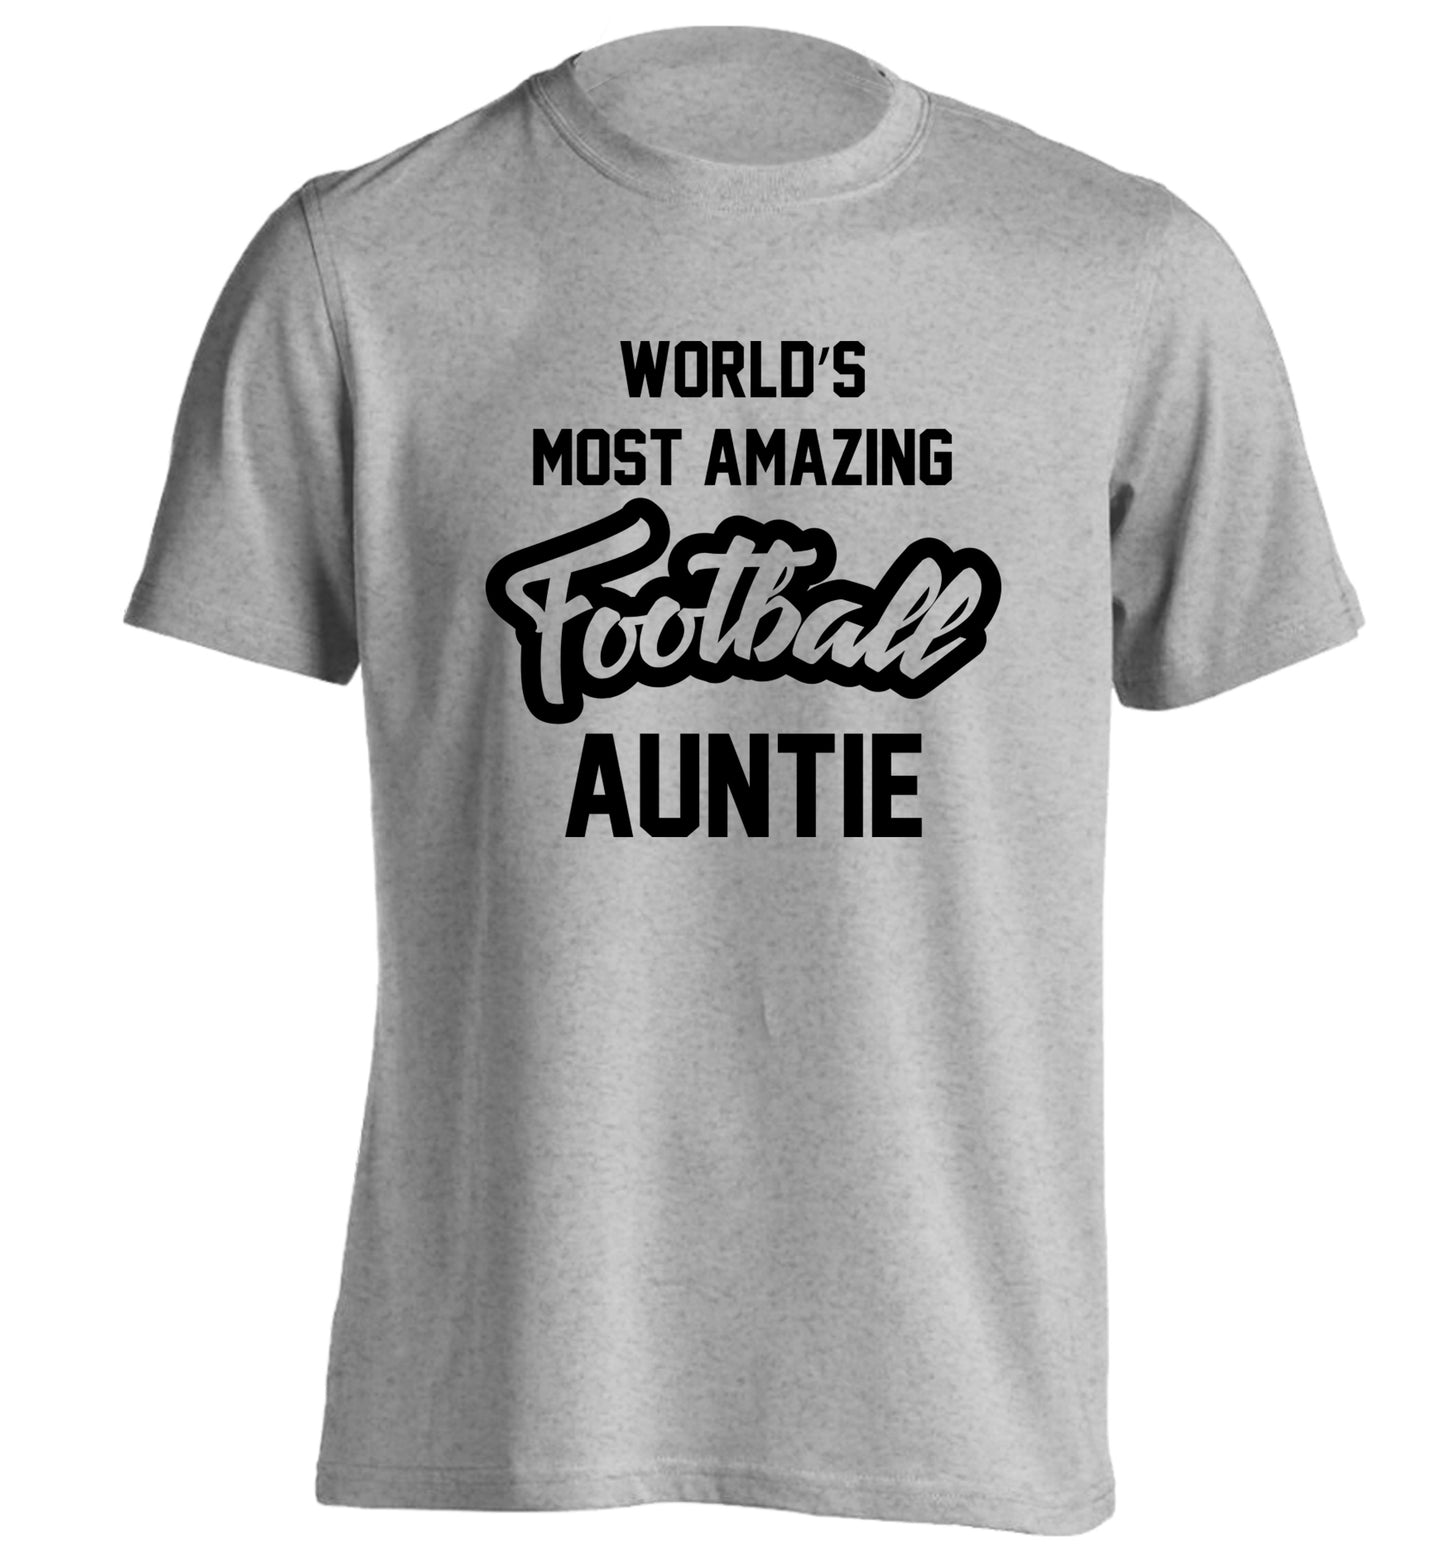 Worlds most amazing football auntie adults unisexgrey Tshirt 2XL